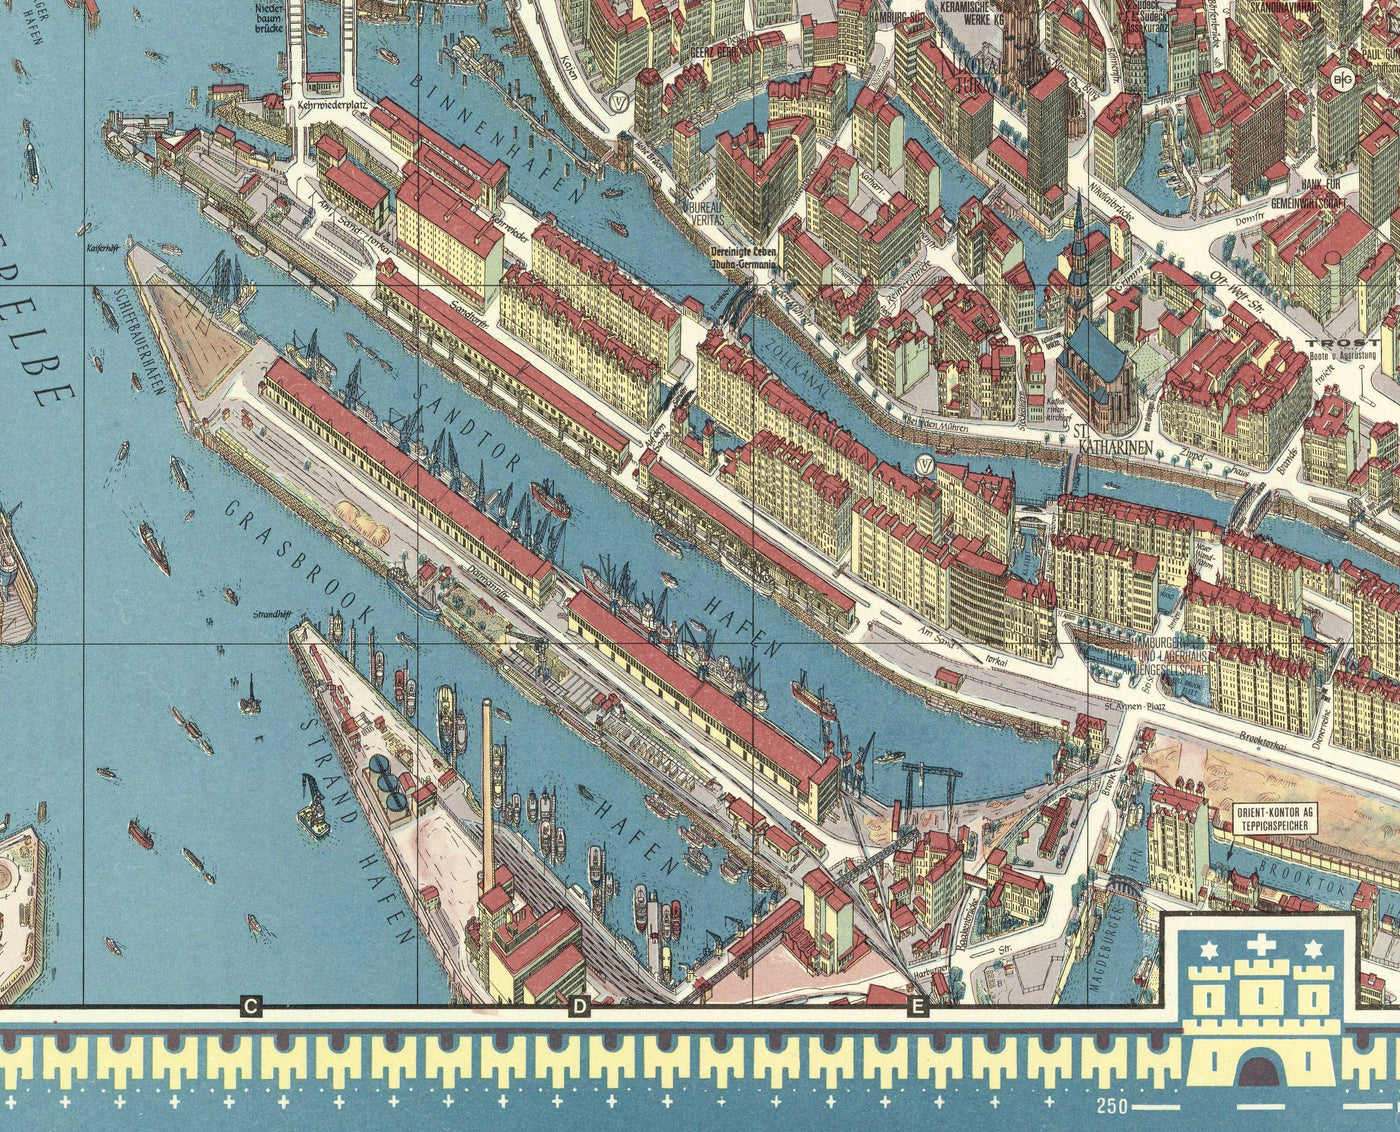 Ancienne carte de Hambourg en 1964 par Hermann Bollman - Binnenalster, Alster Lakes, Heiligengeistfeld, Planten un Blomen, Central Station